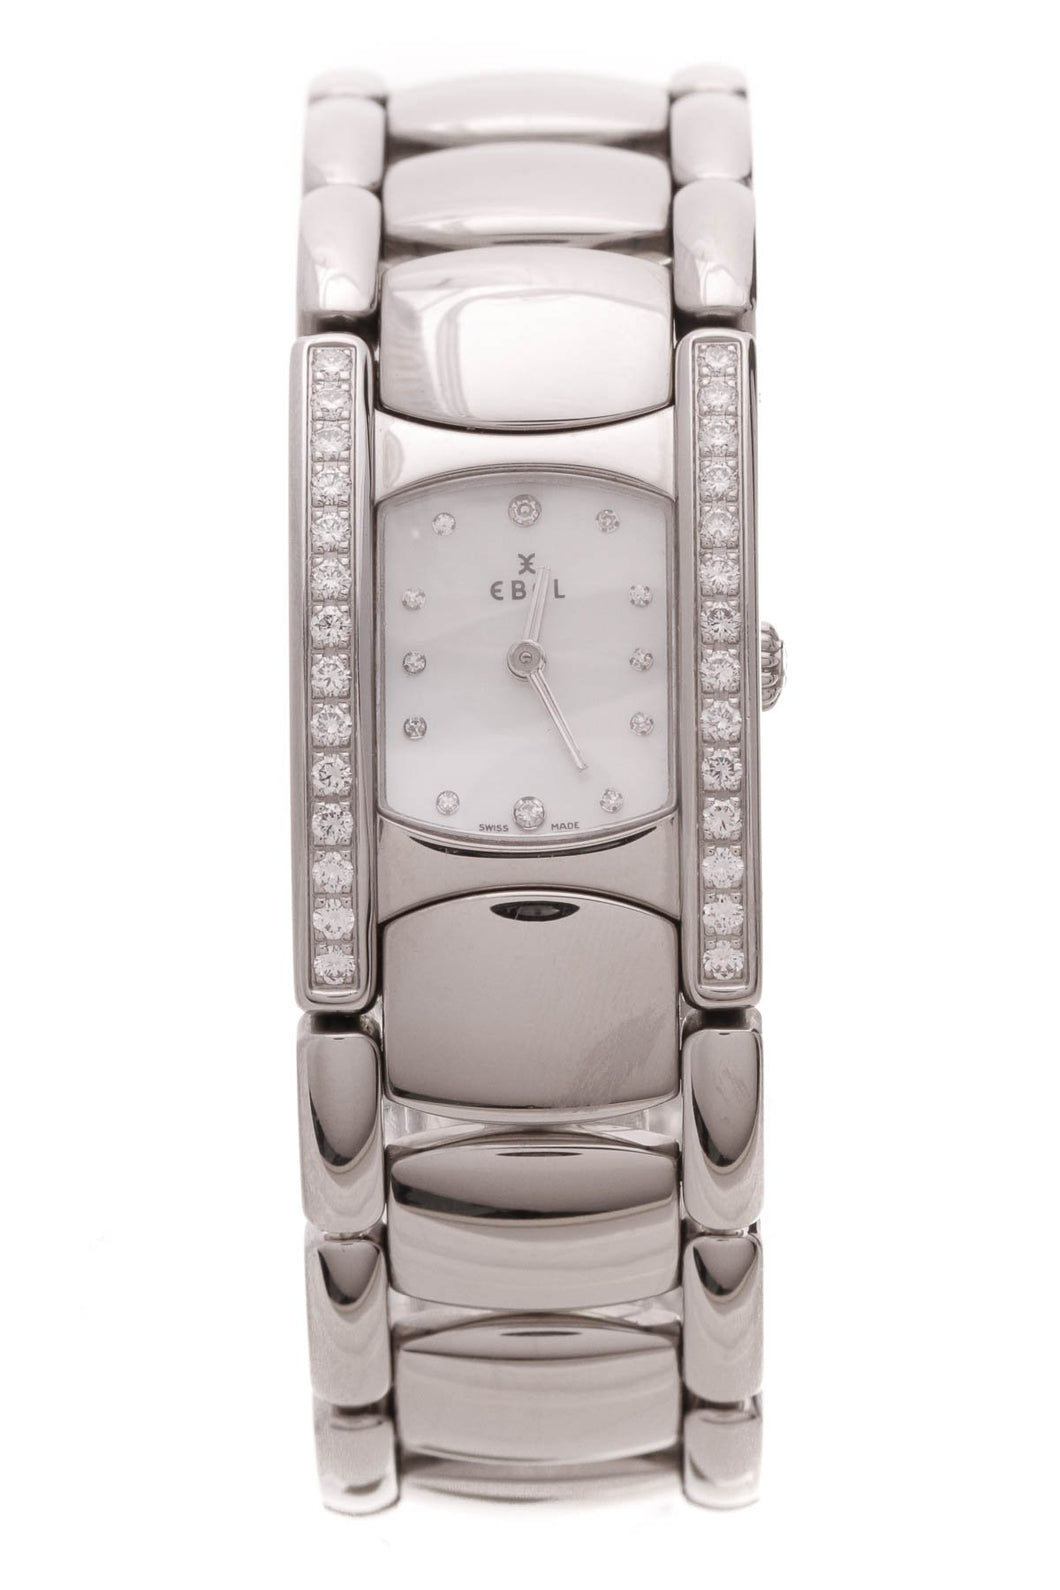 Ebel Diamond Beluga Quartz Watch - Steel